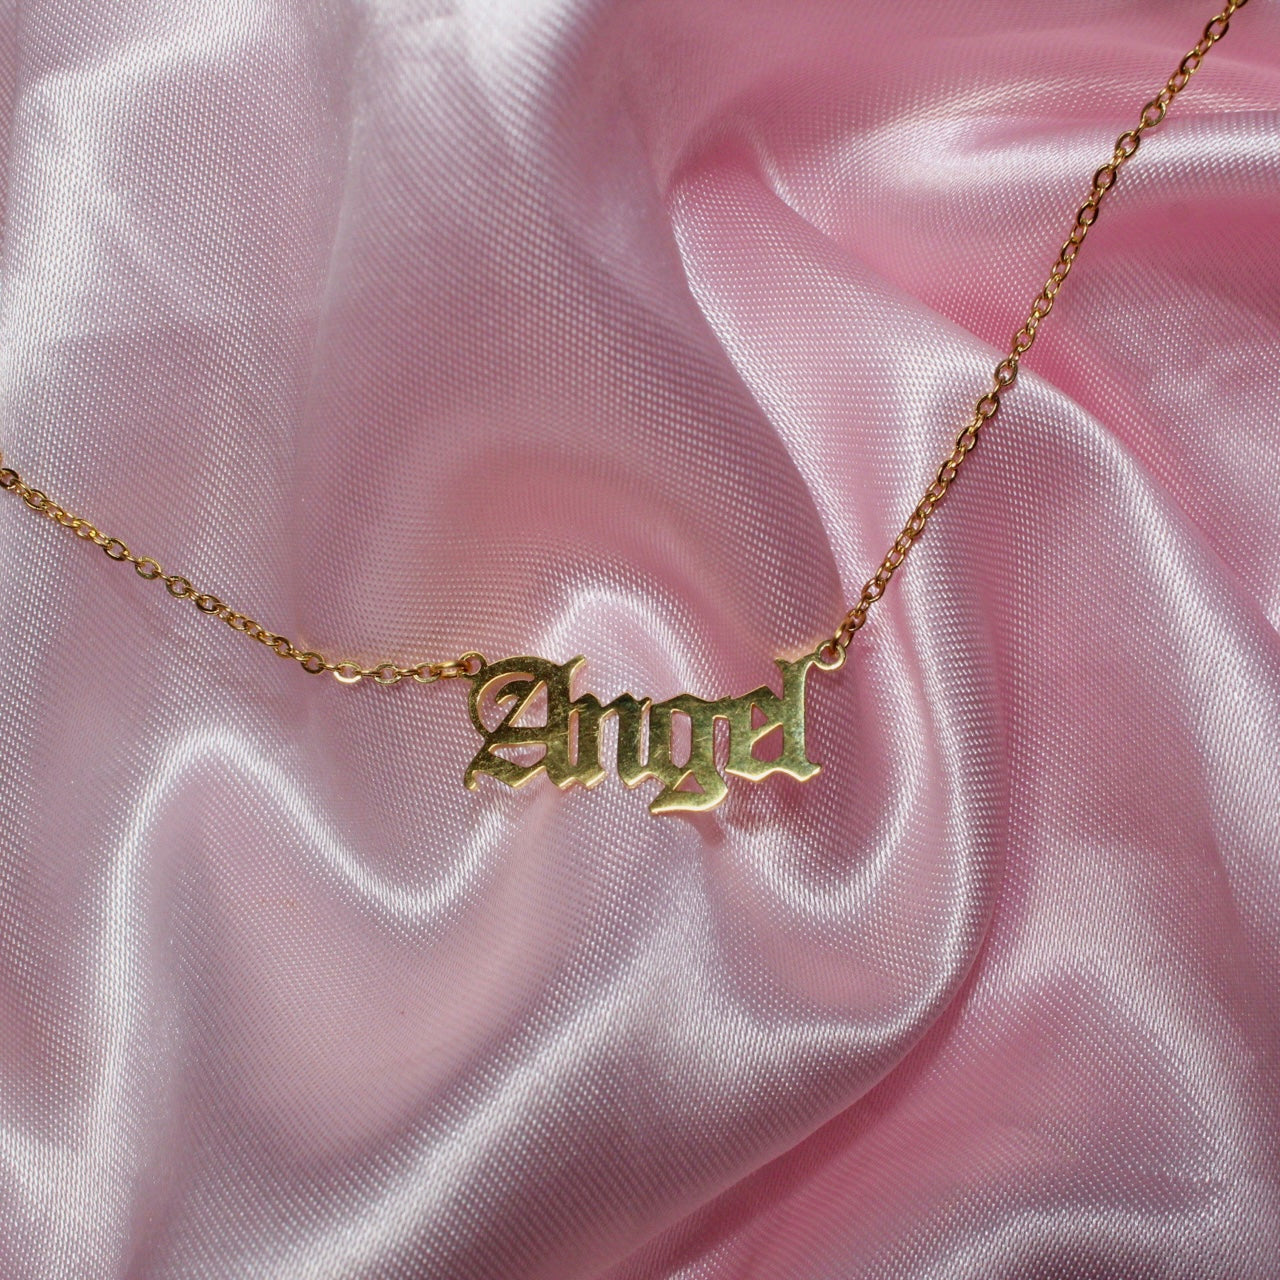 Angel 18k Gold Necklace - Muna Jewelz